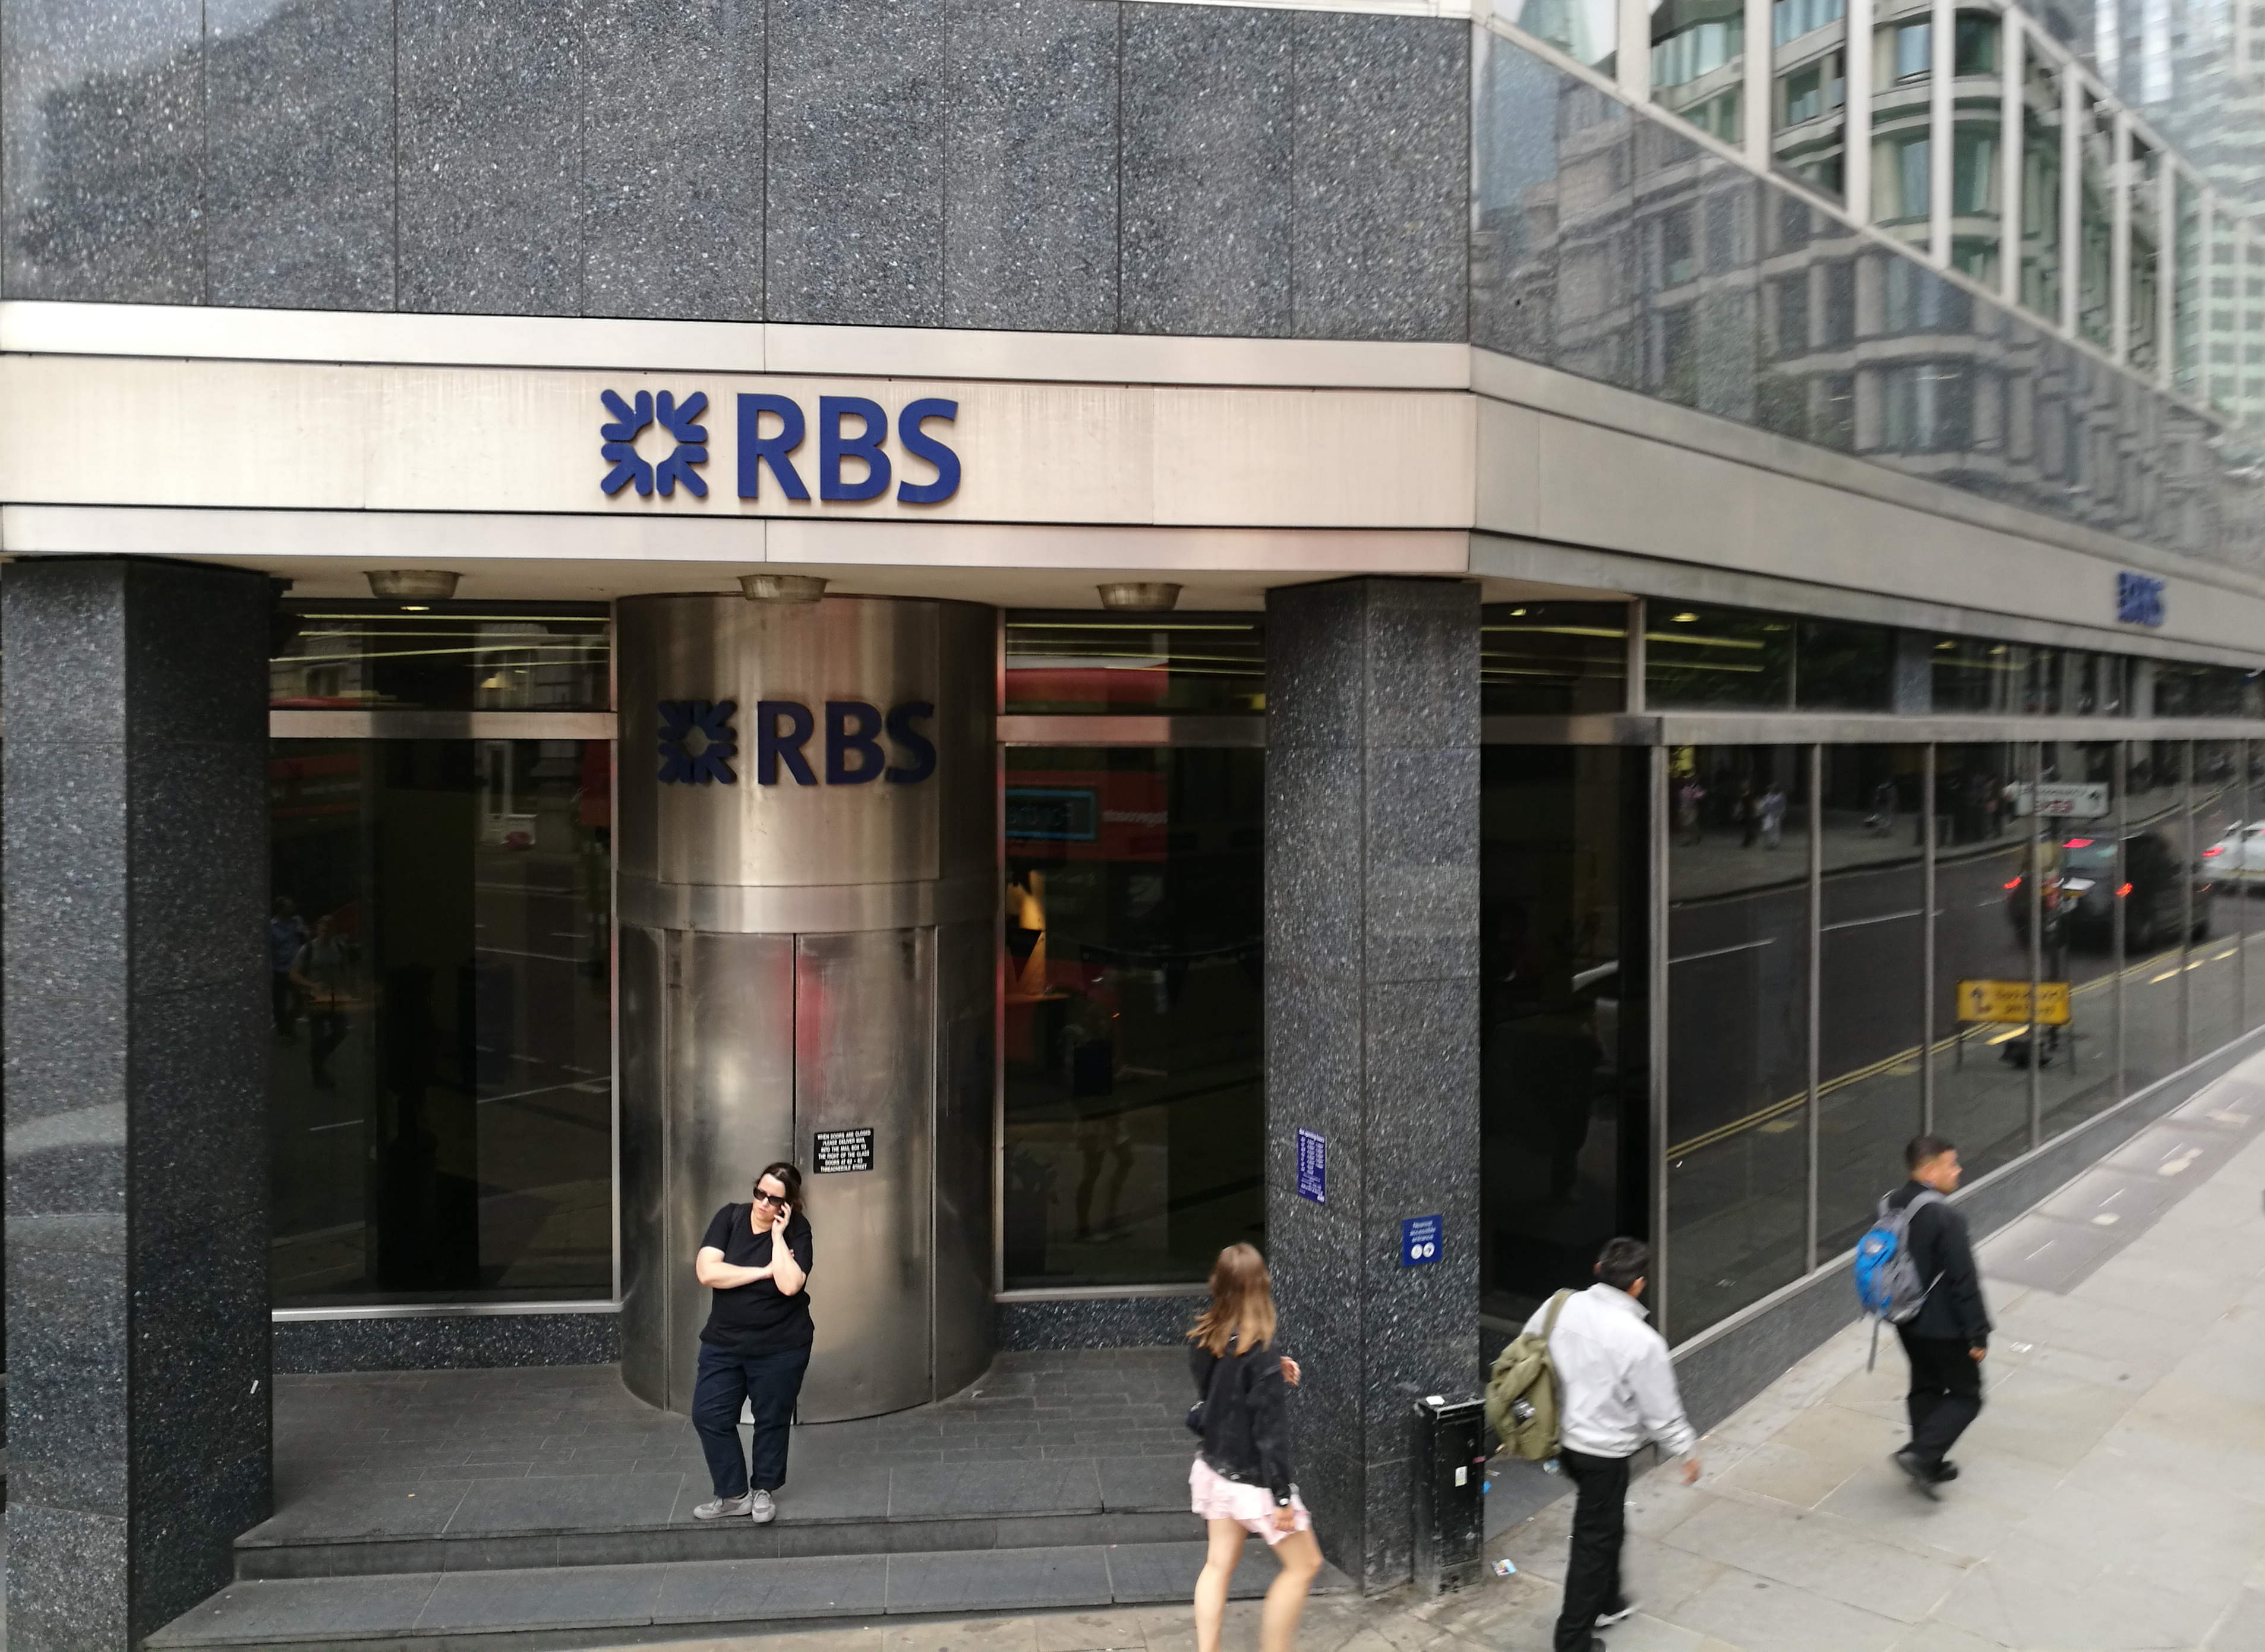 RBS Q2 2019 earnings beat forecasts despite margin pressure